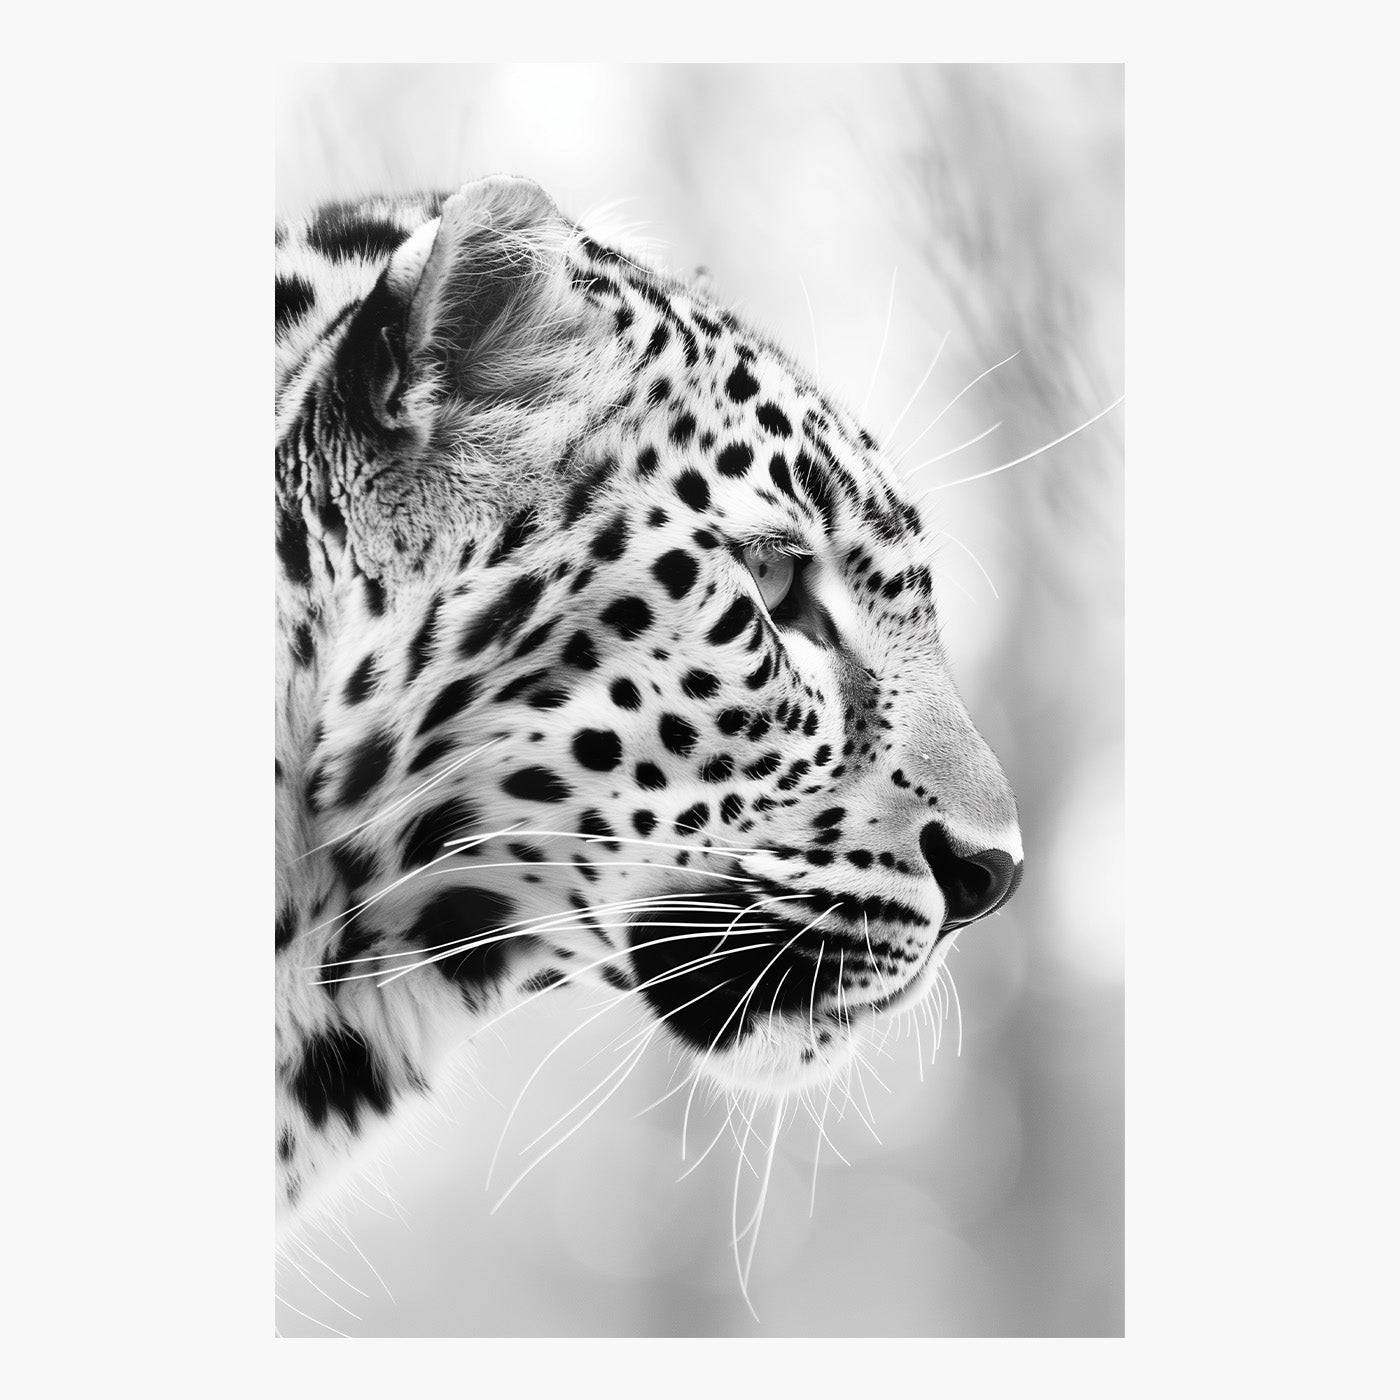 Leopard's Profile